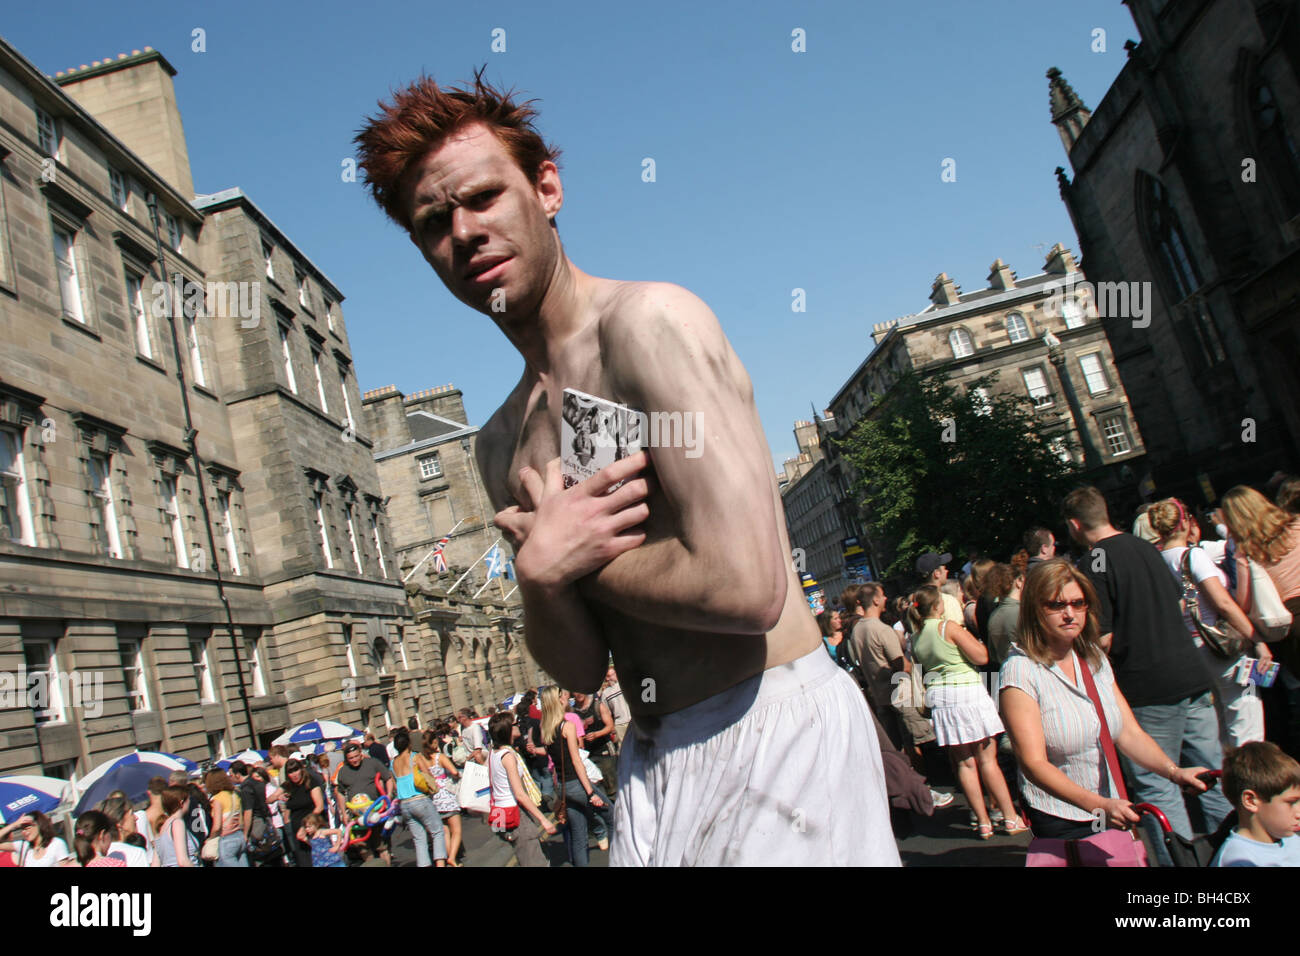 FRINGE FESTIVAL PERFORMERS ON ROYAL MILE, during Edinburgh International Arts Festival, EDINBURGH, SCOTLAND. 2003. Stock Photo